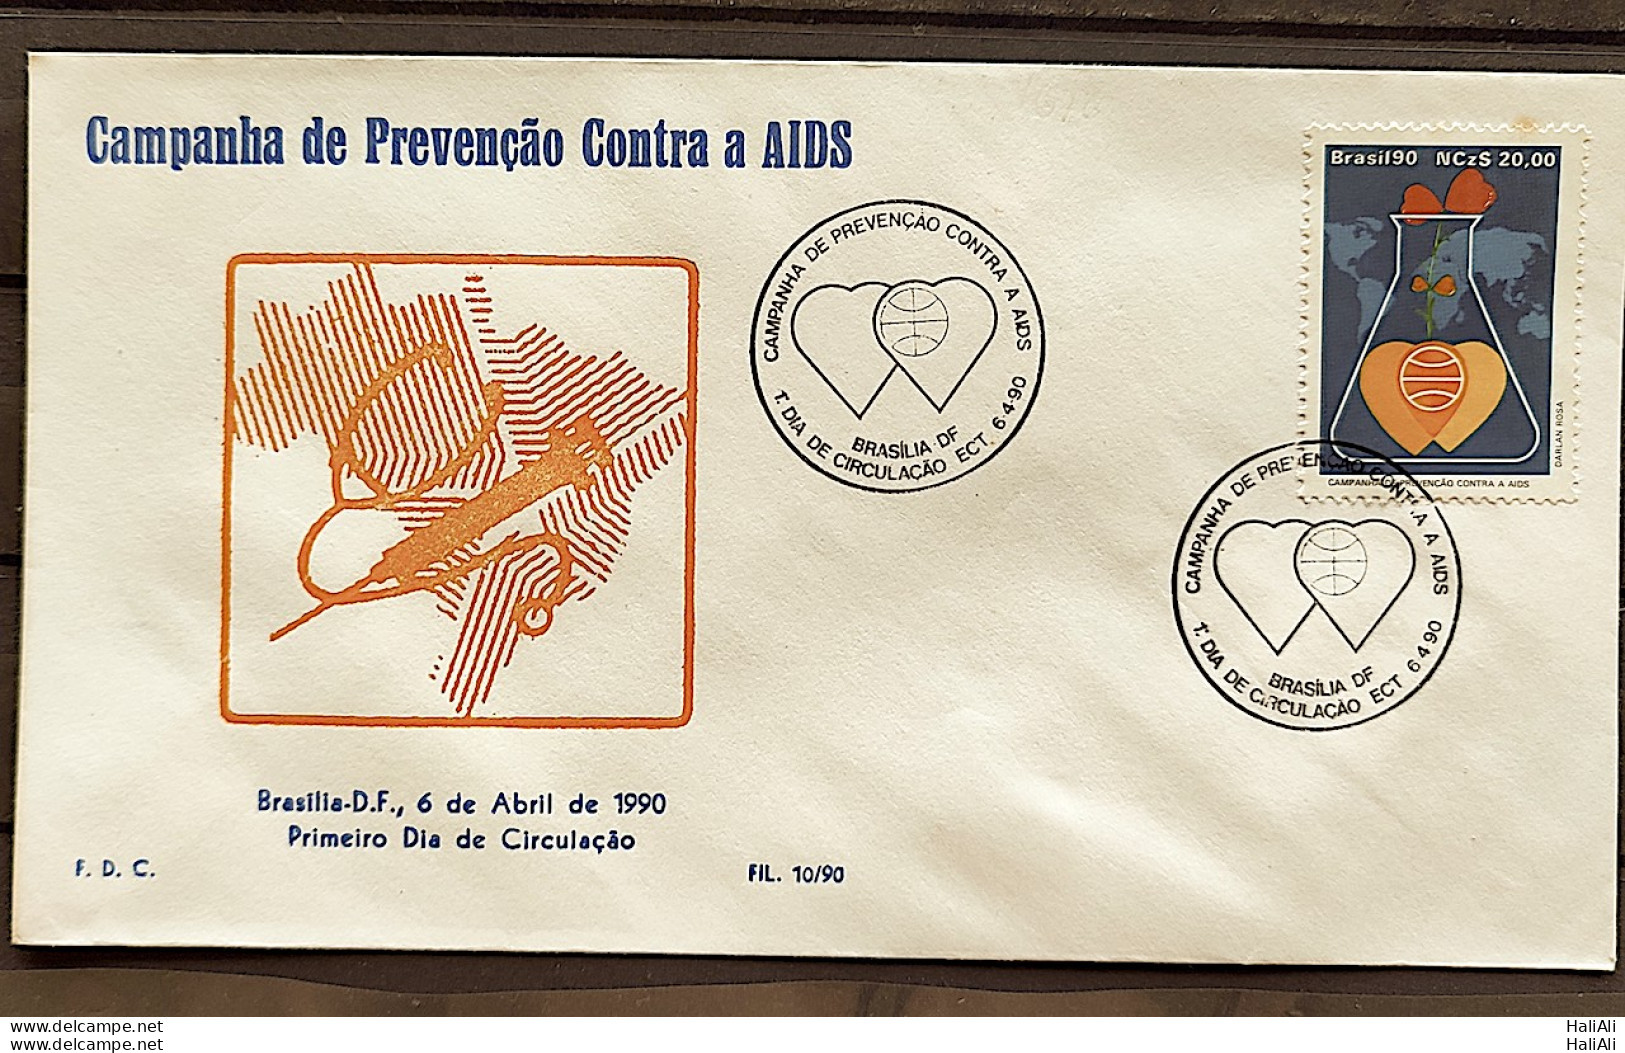 Brazil Envelope PVT FIL 010 1990 Campaign Against AIDS Health CBC Brasilia - FDC